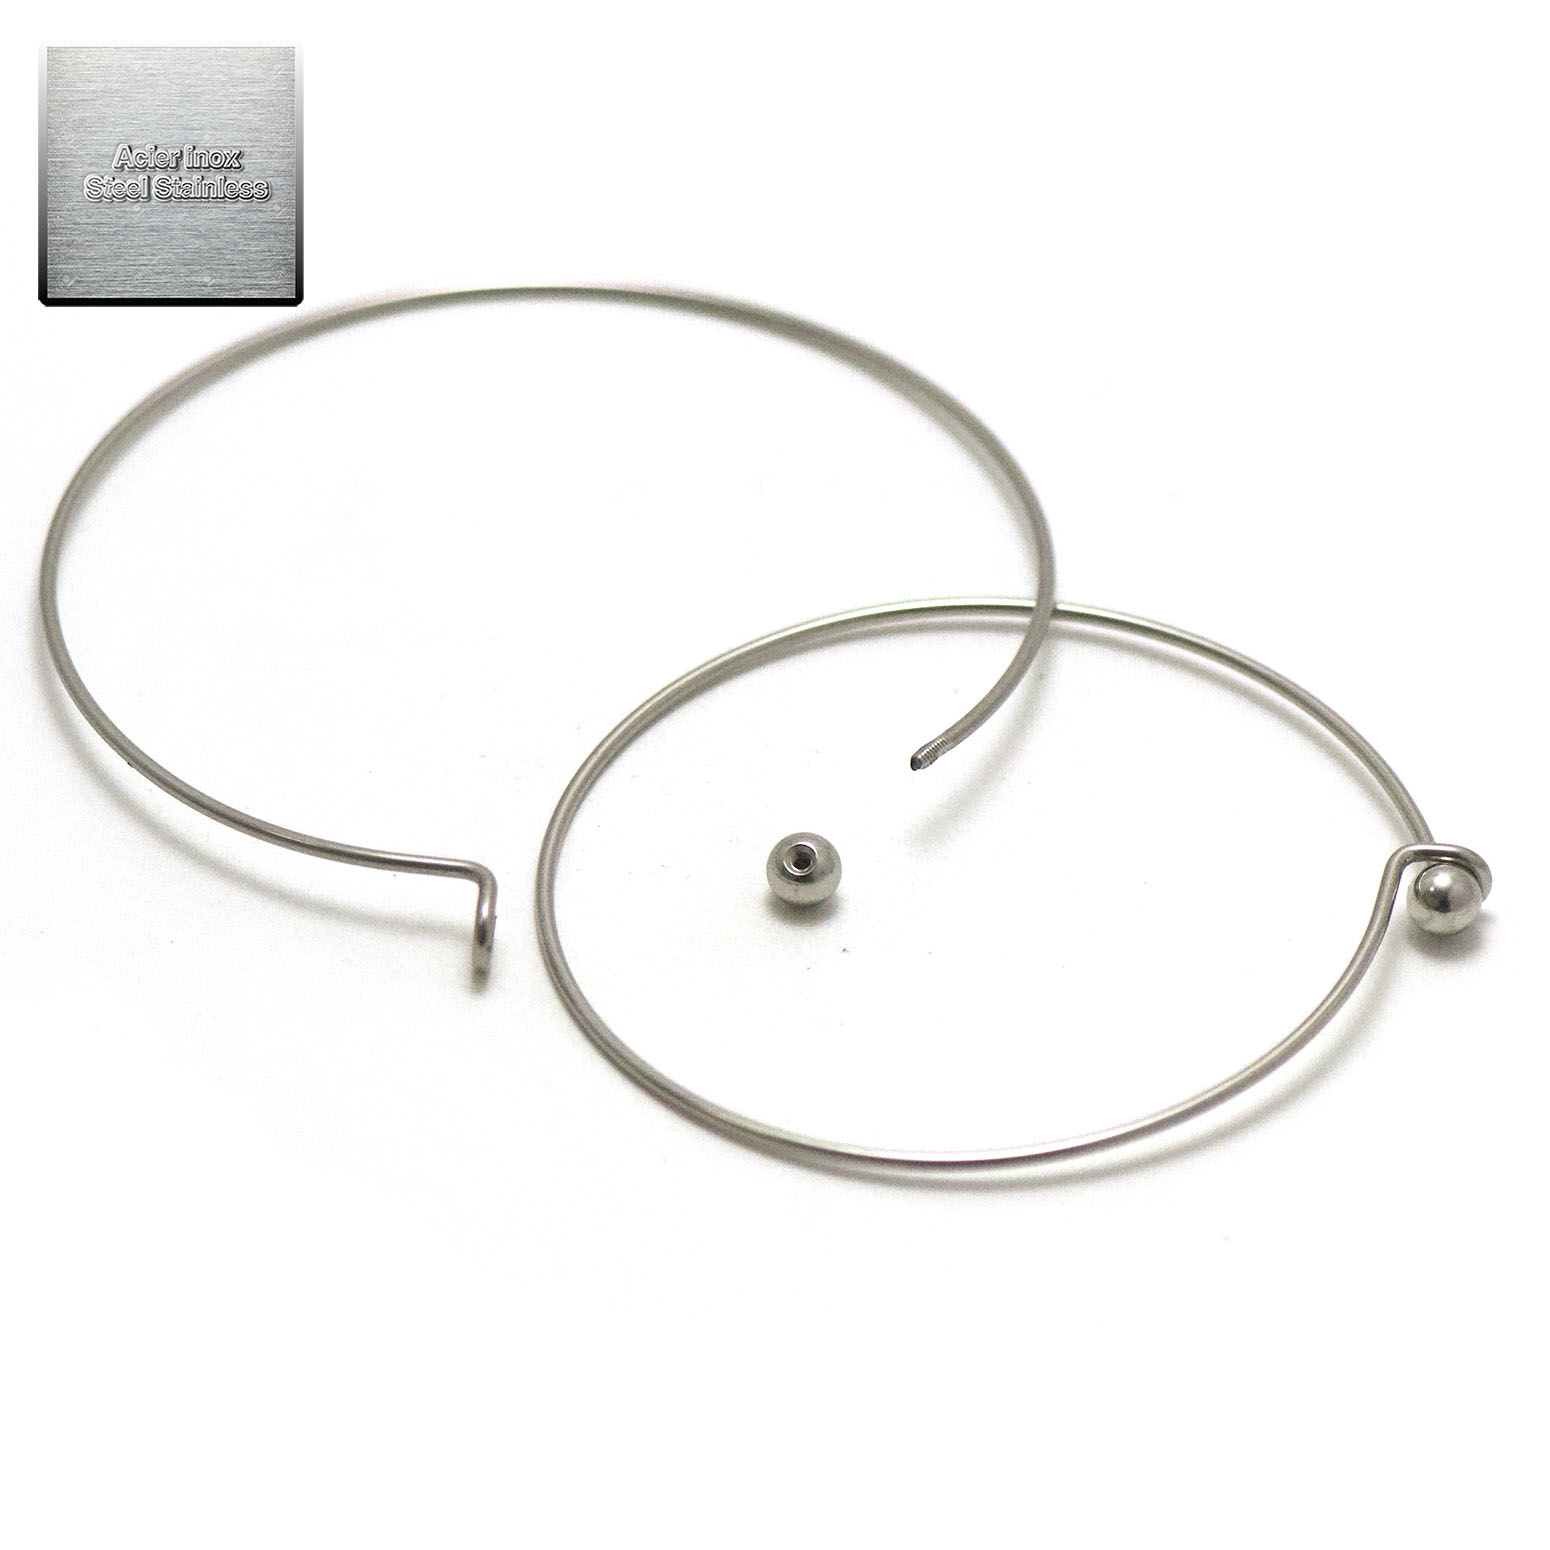 Support de Bracelet Jonc 2mm pour perles en ACIER INOXYDABLE 304